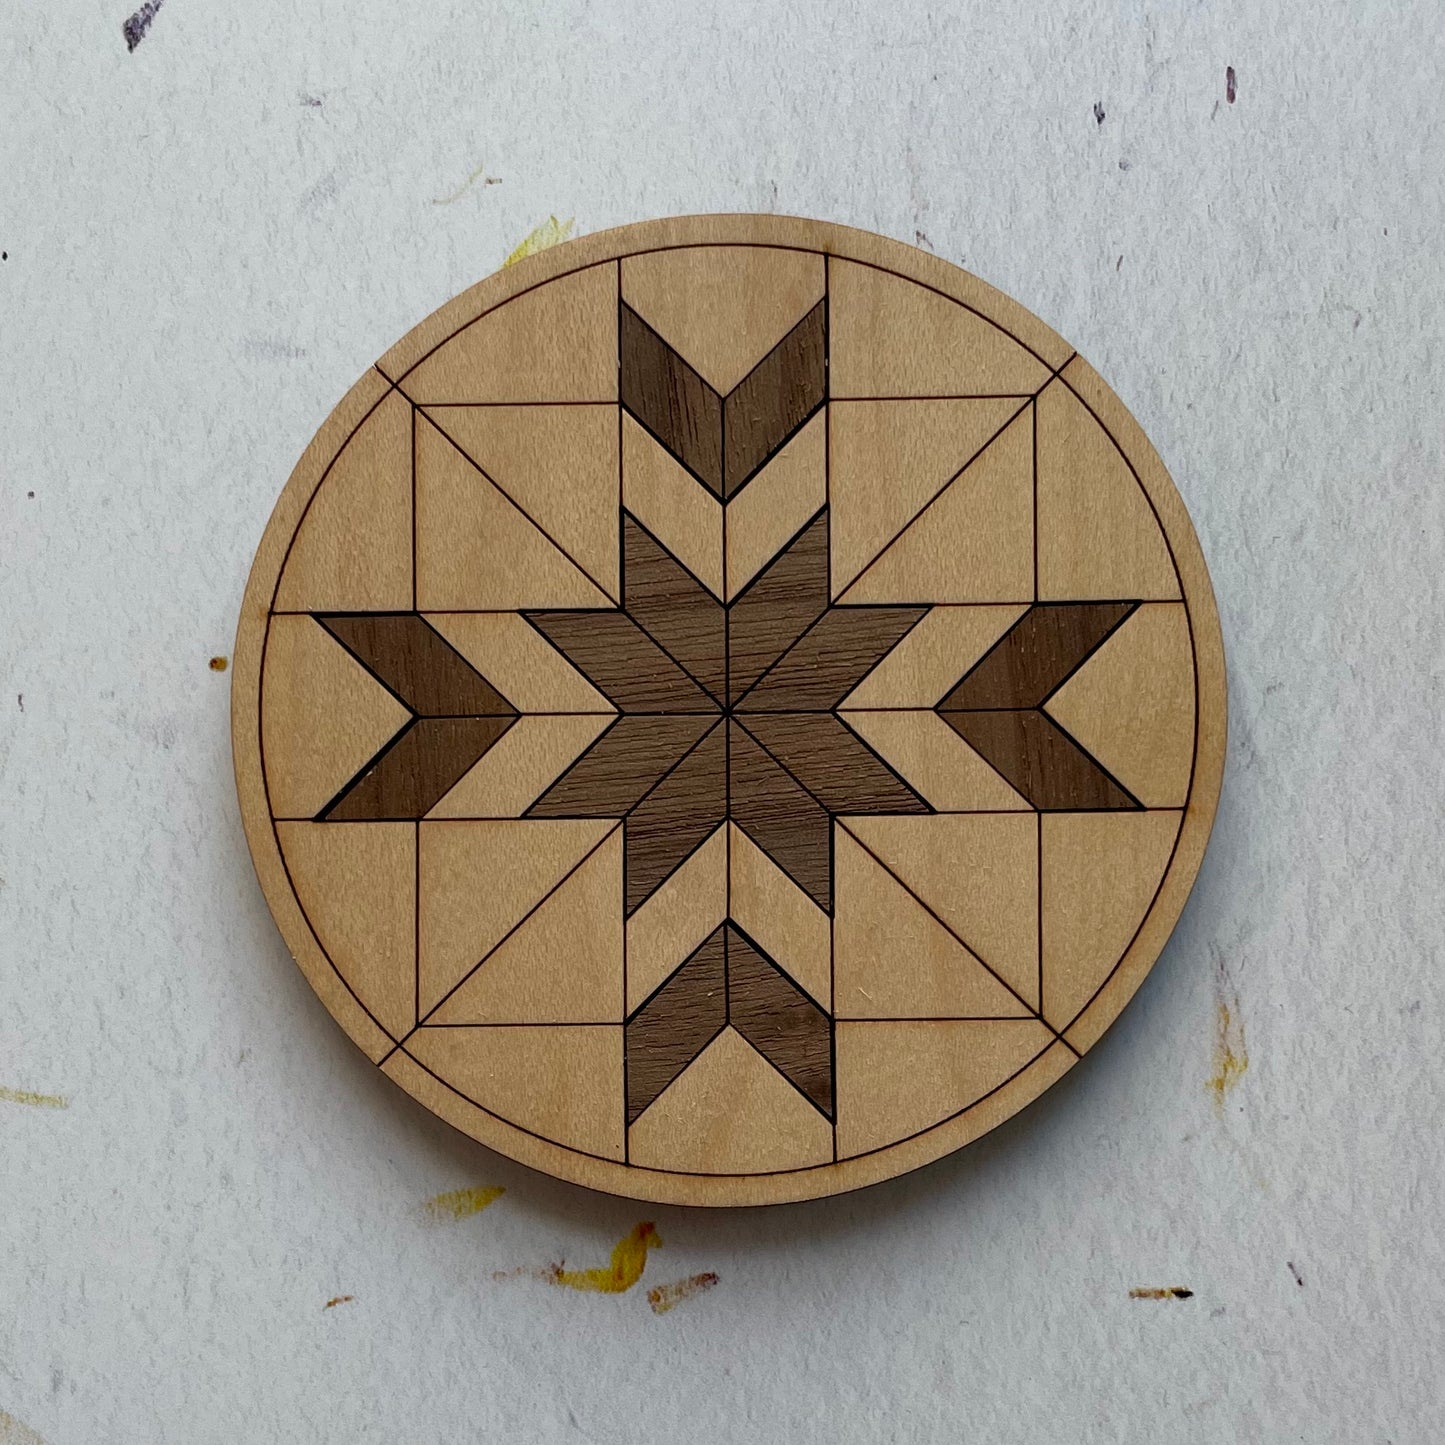 Wood Inlay (Quilt Design) Coaster Set